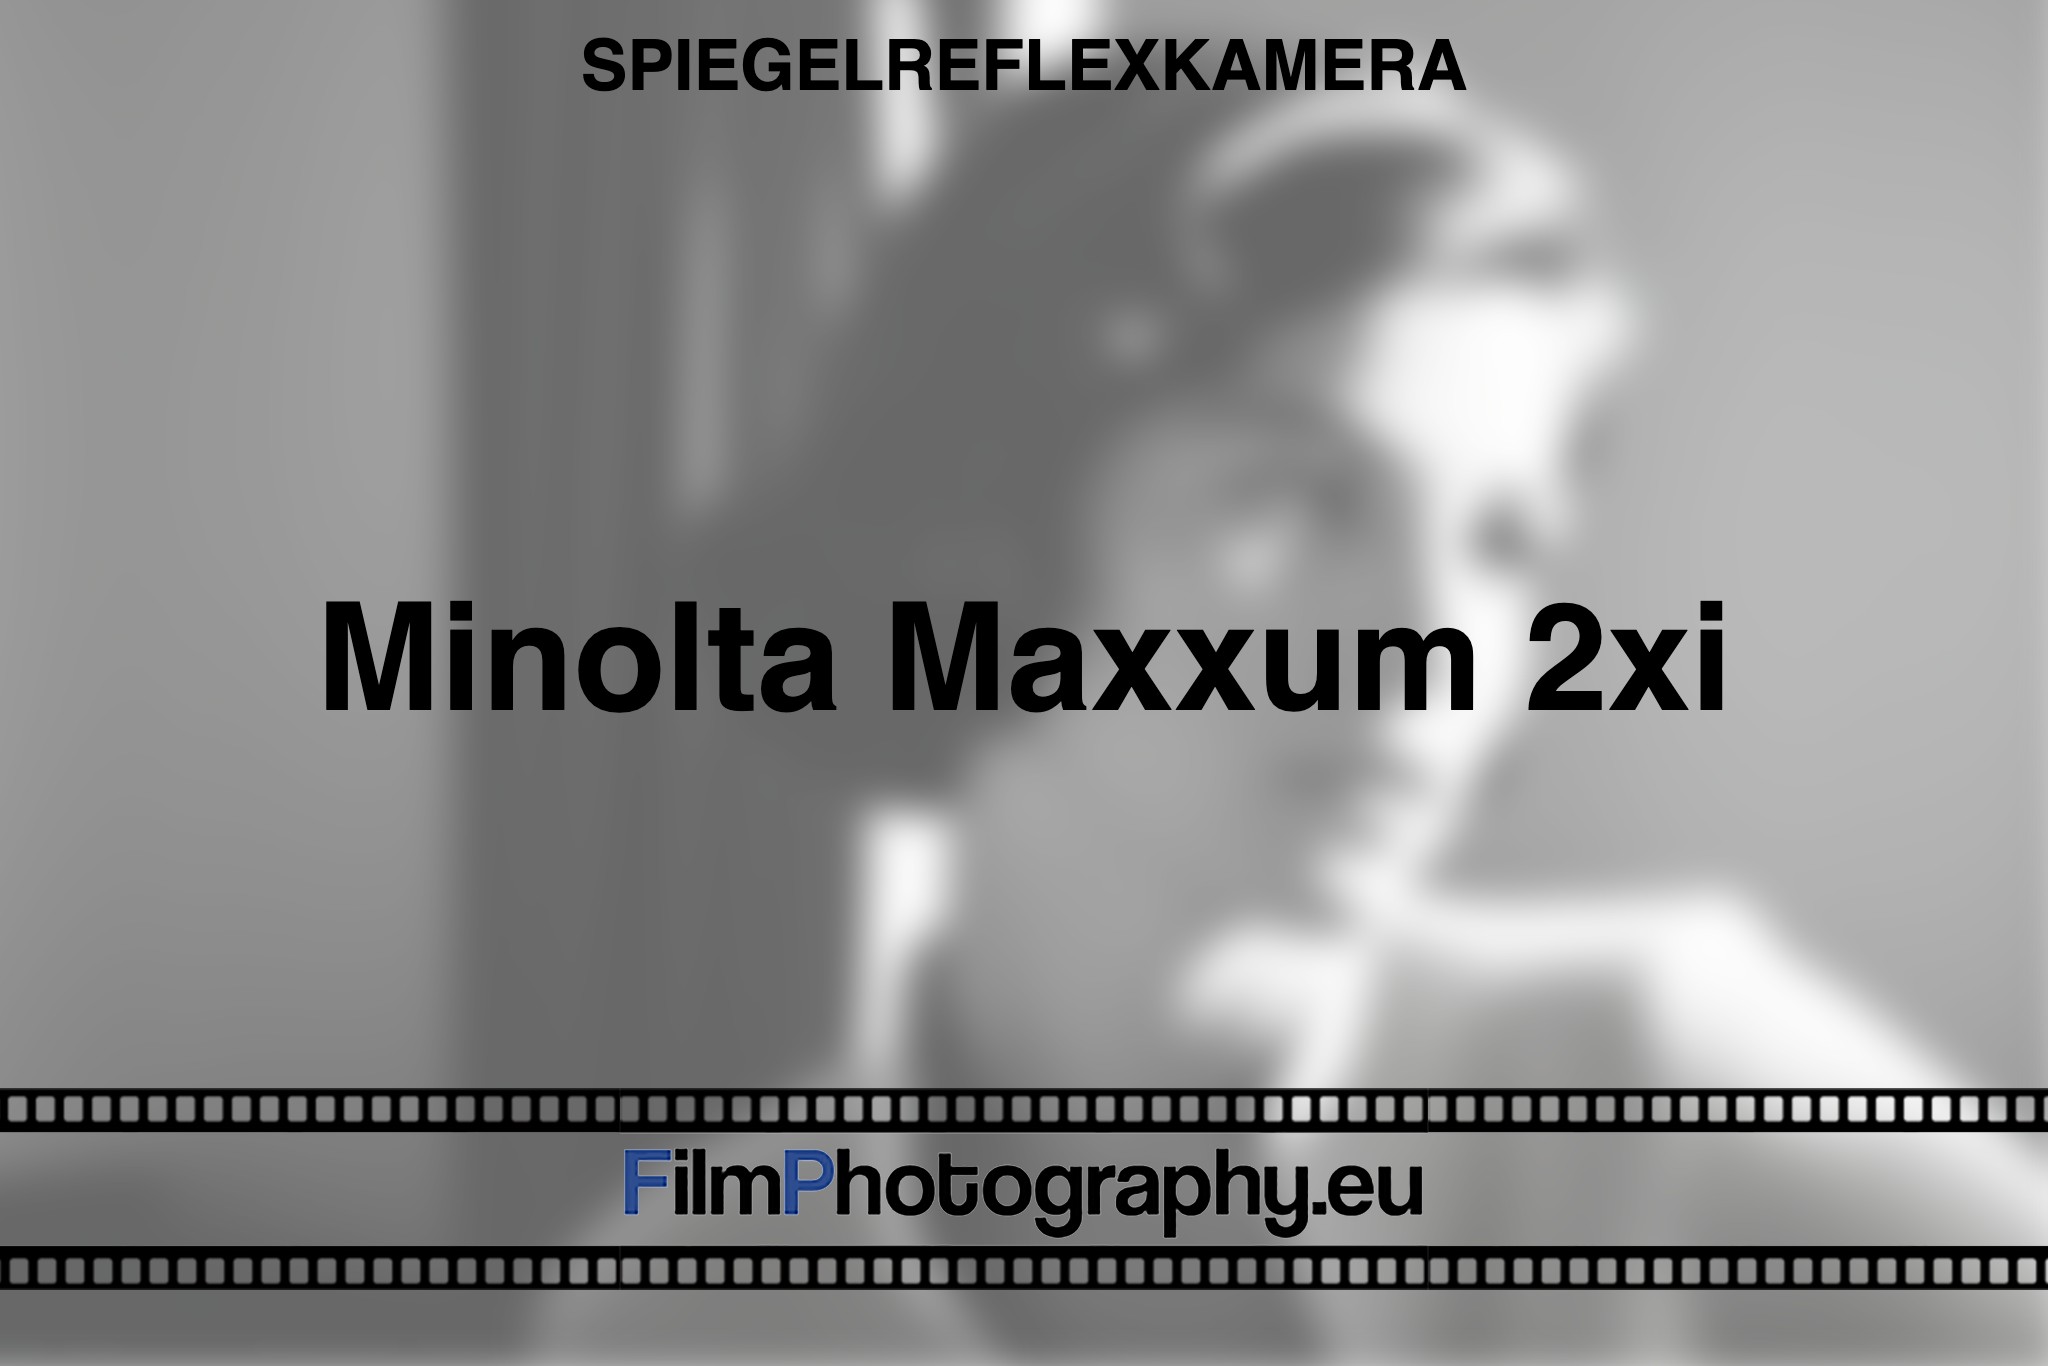 minolta-maxxum-2xi-spiegelreflexkamera-bnv